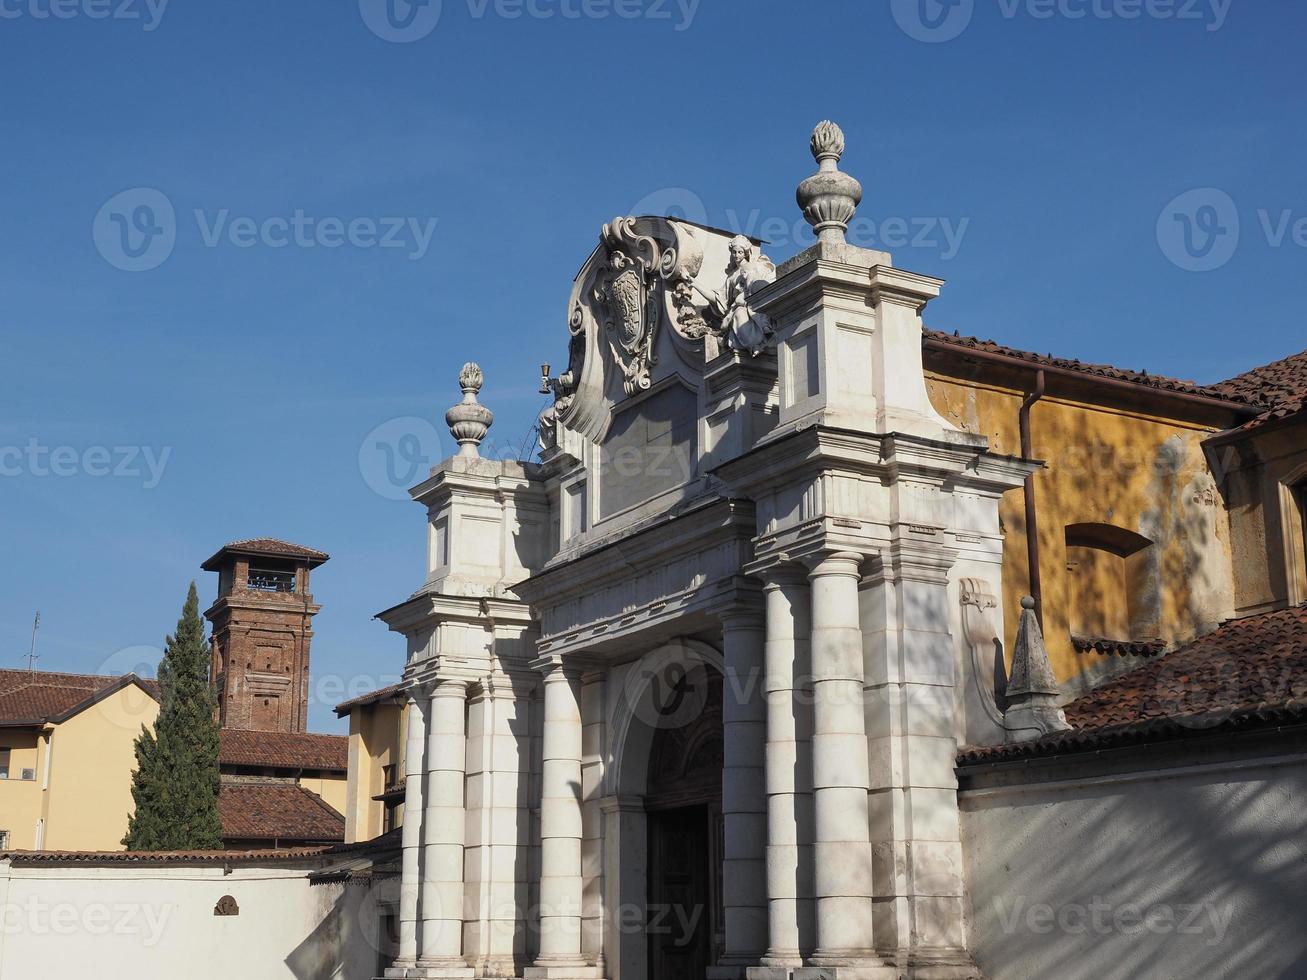 La Certosa former monastery and insane asylum entrance portal in photo